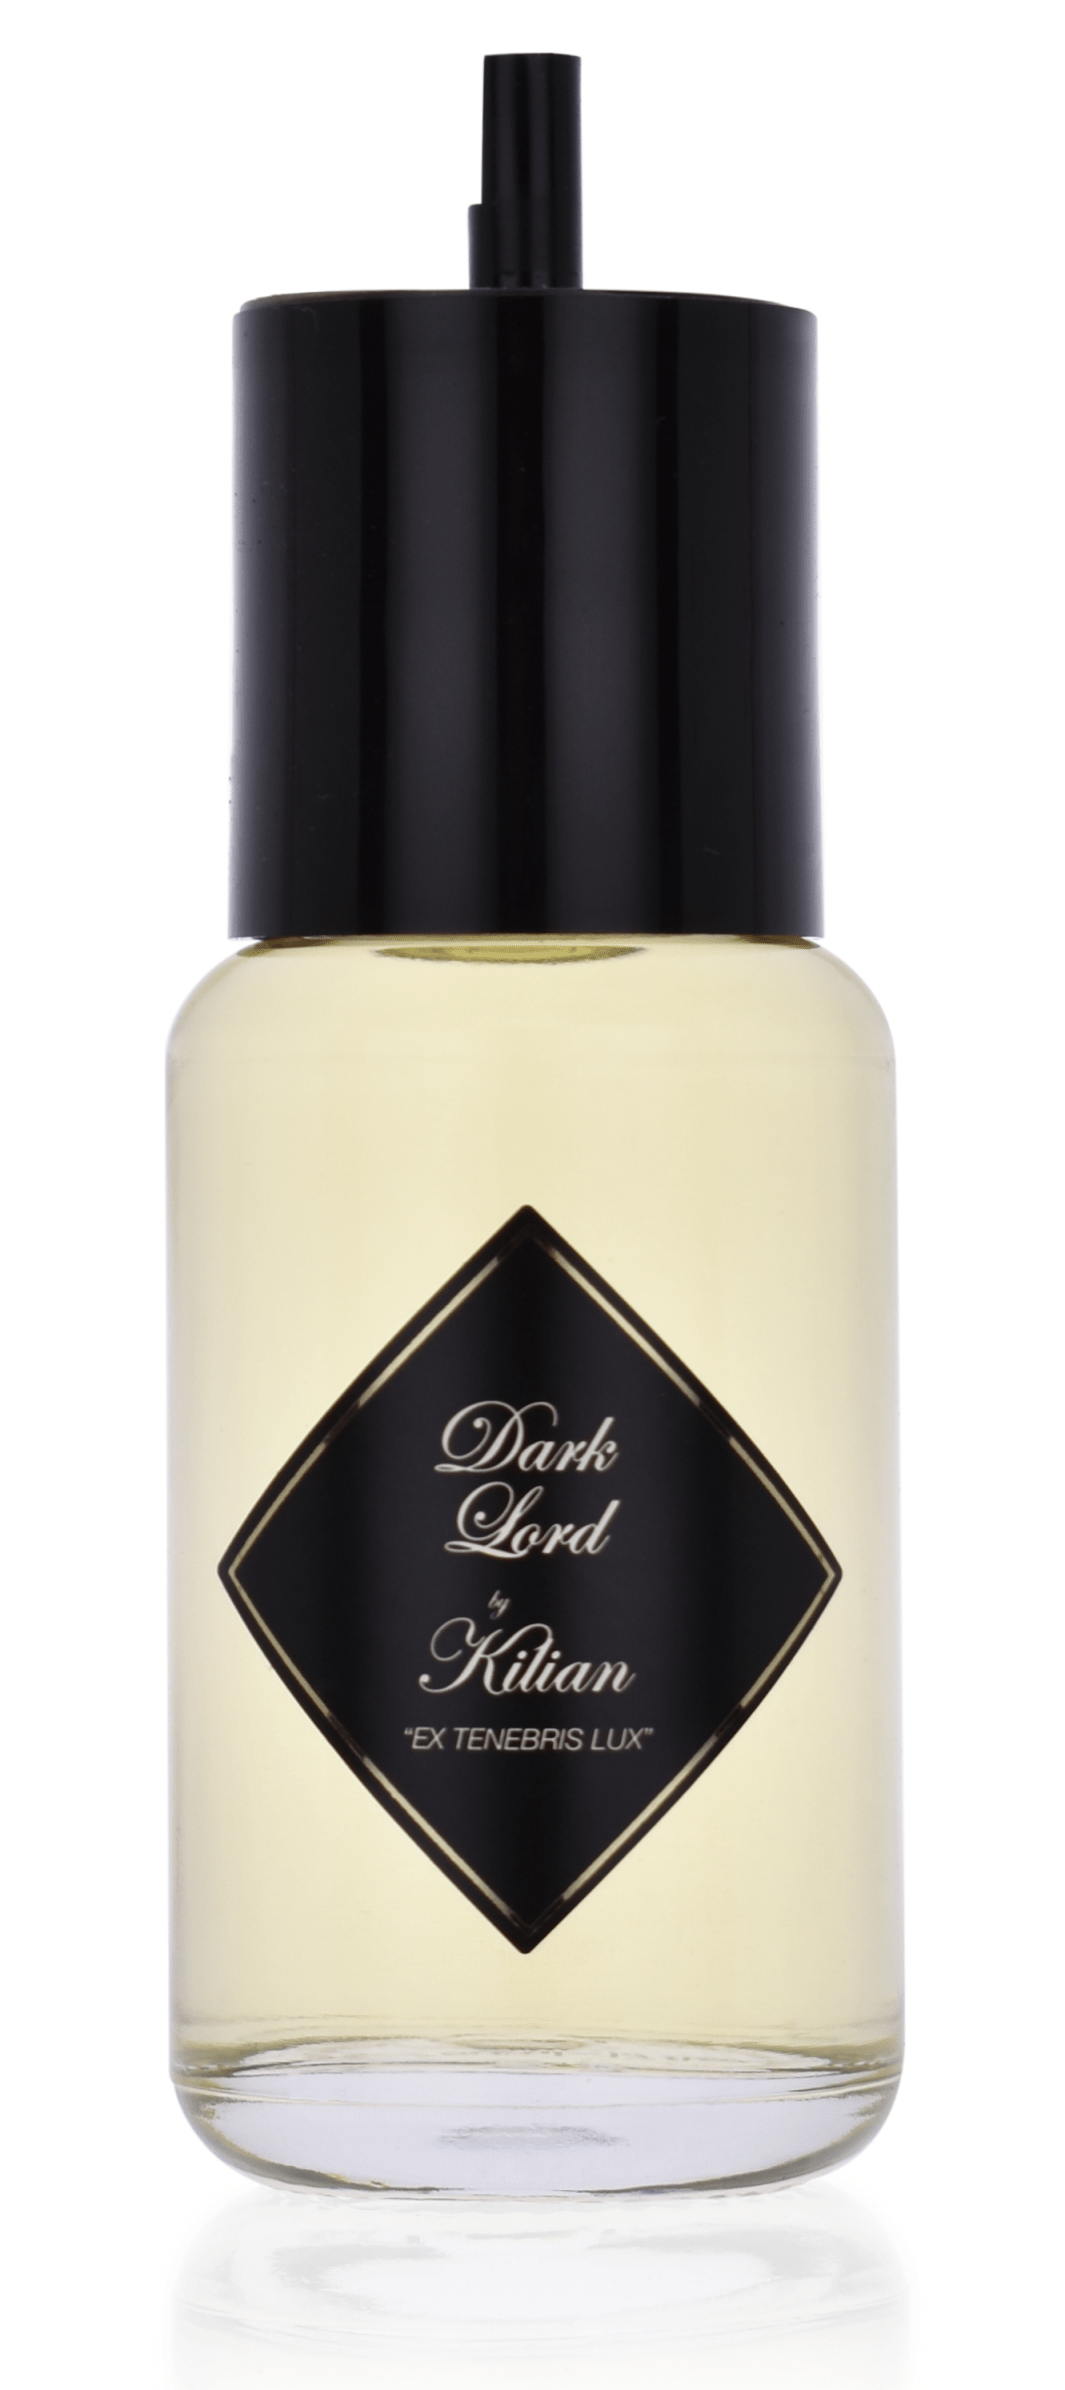 Kilian Dark Lord Ex Tenebris Lux 50 ml Eau de Parfum Refill